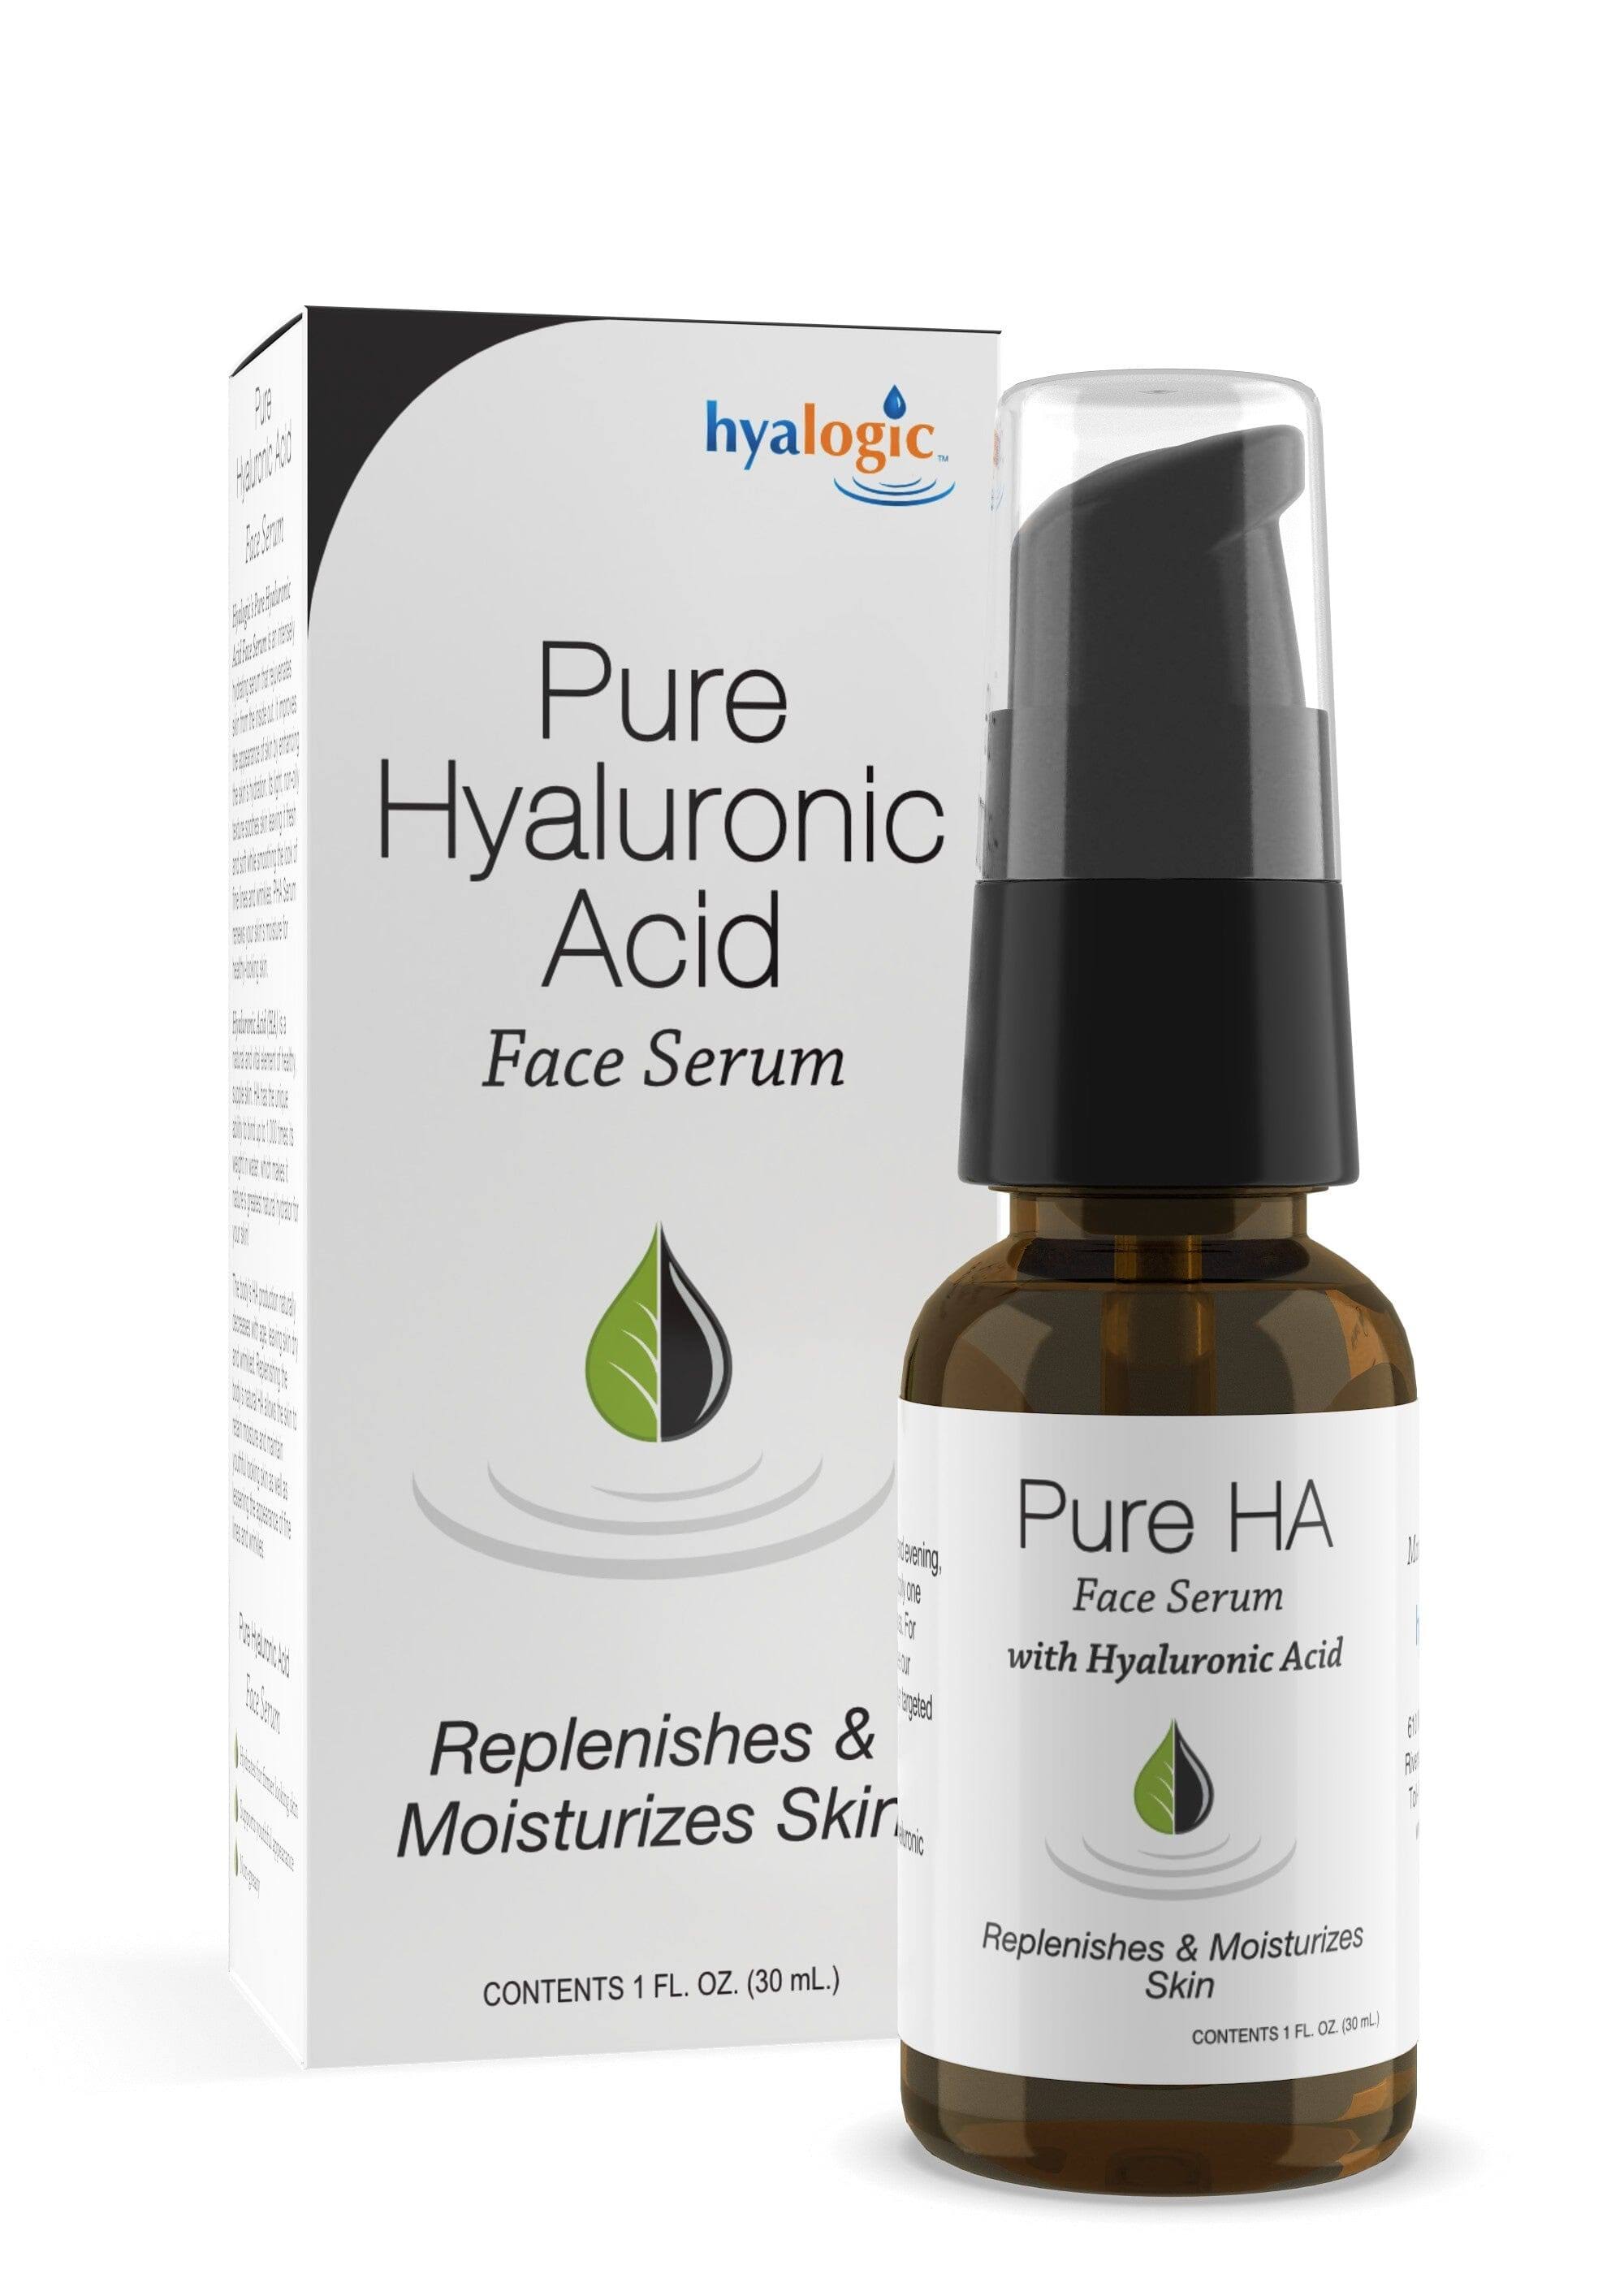 Hyalogic Pure Hyaluronic Acid Face Serum 1 fl oz (30 ml)